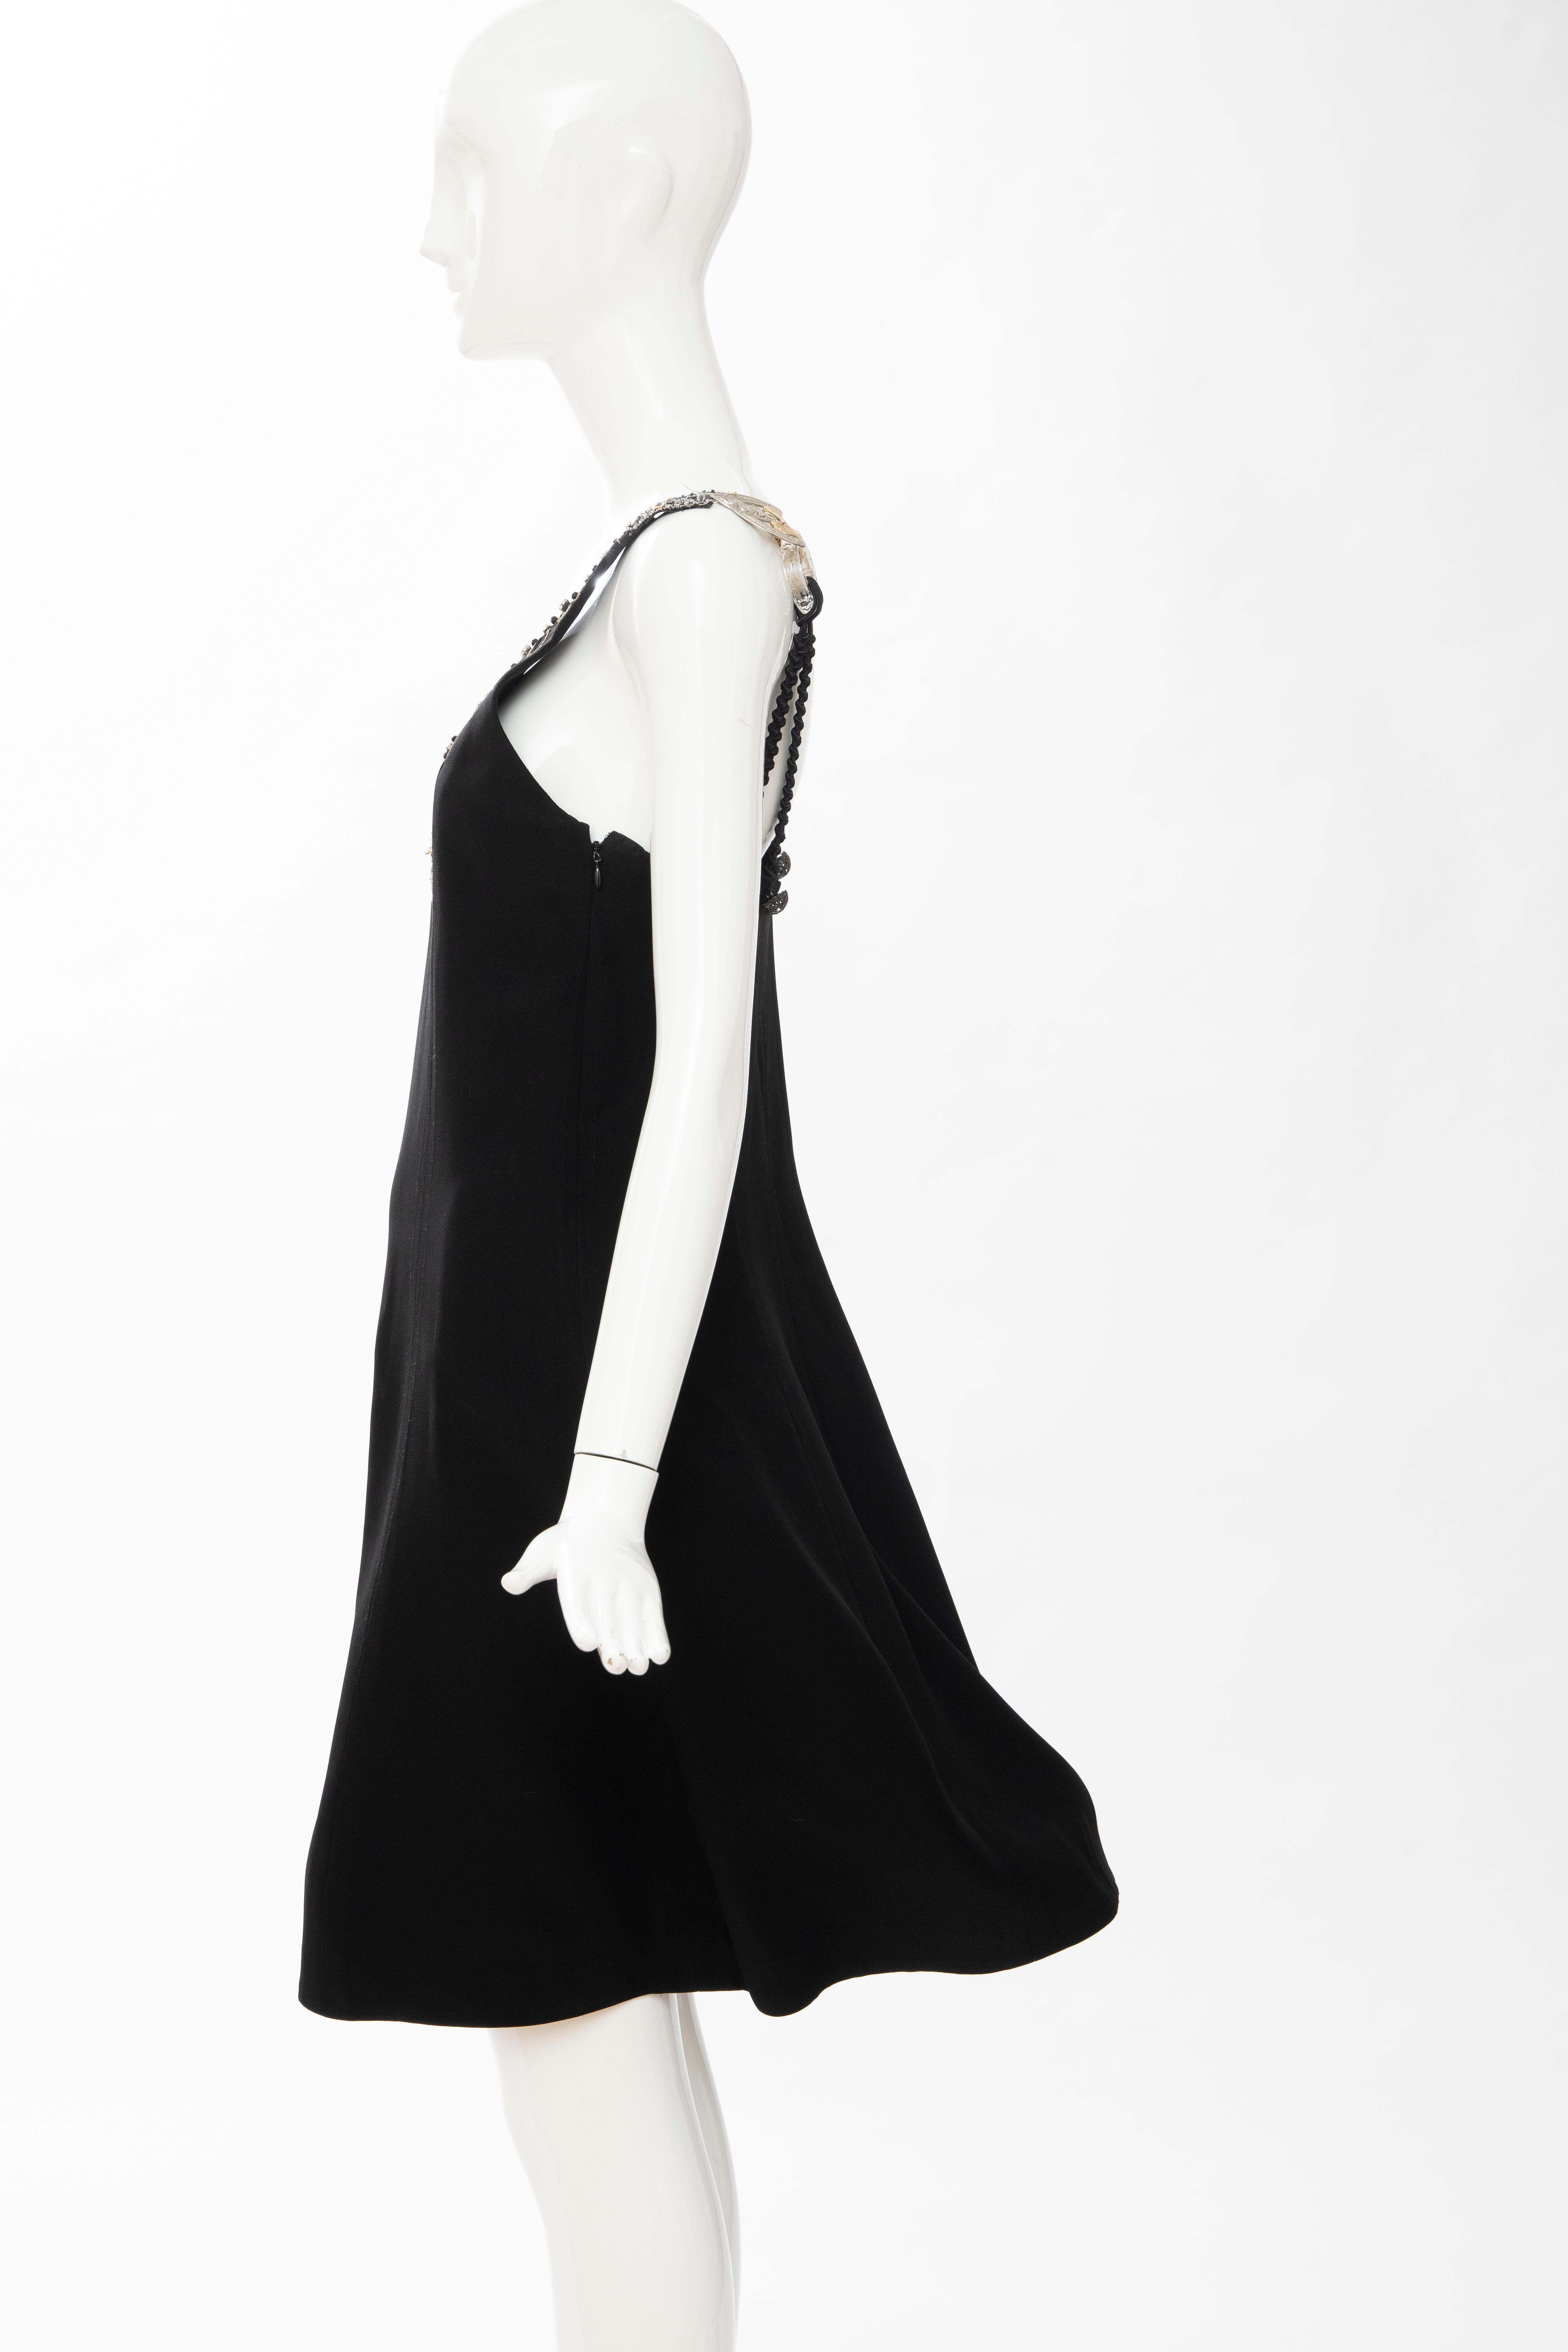 Christian Dior Gianfranco Ferré Numbered Black Embroidered Dress Ensemble, 1991 13